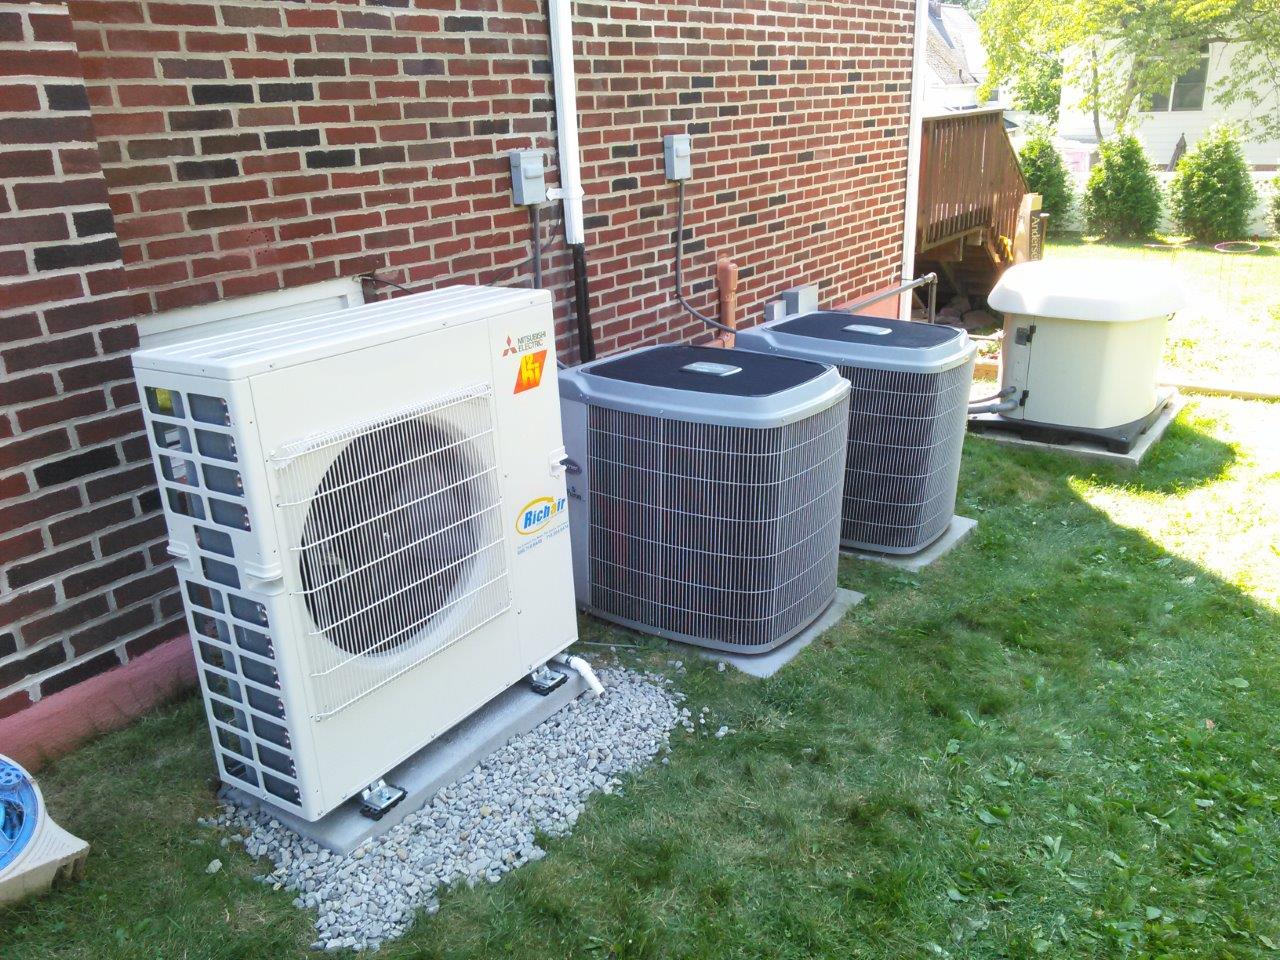 H2i hyper heat heat pump outdoor unit in Teaneck, NJ